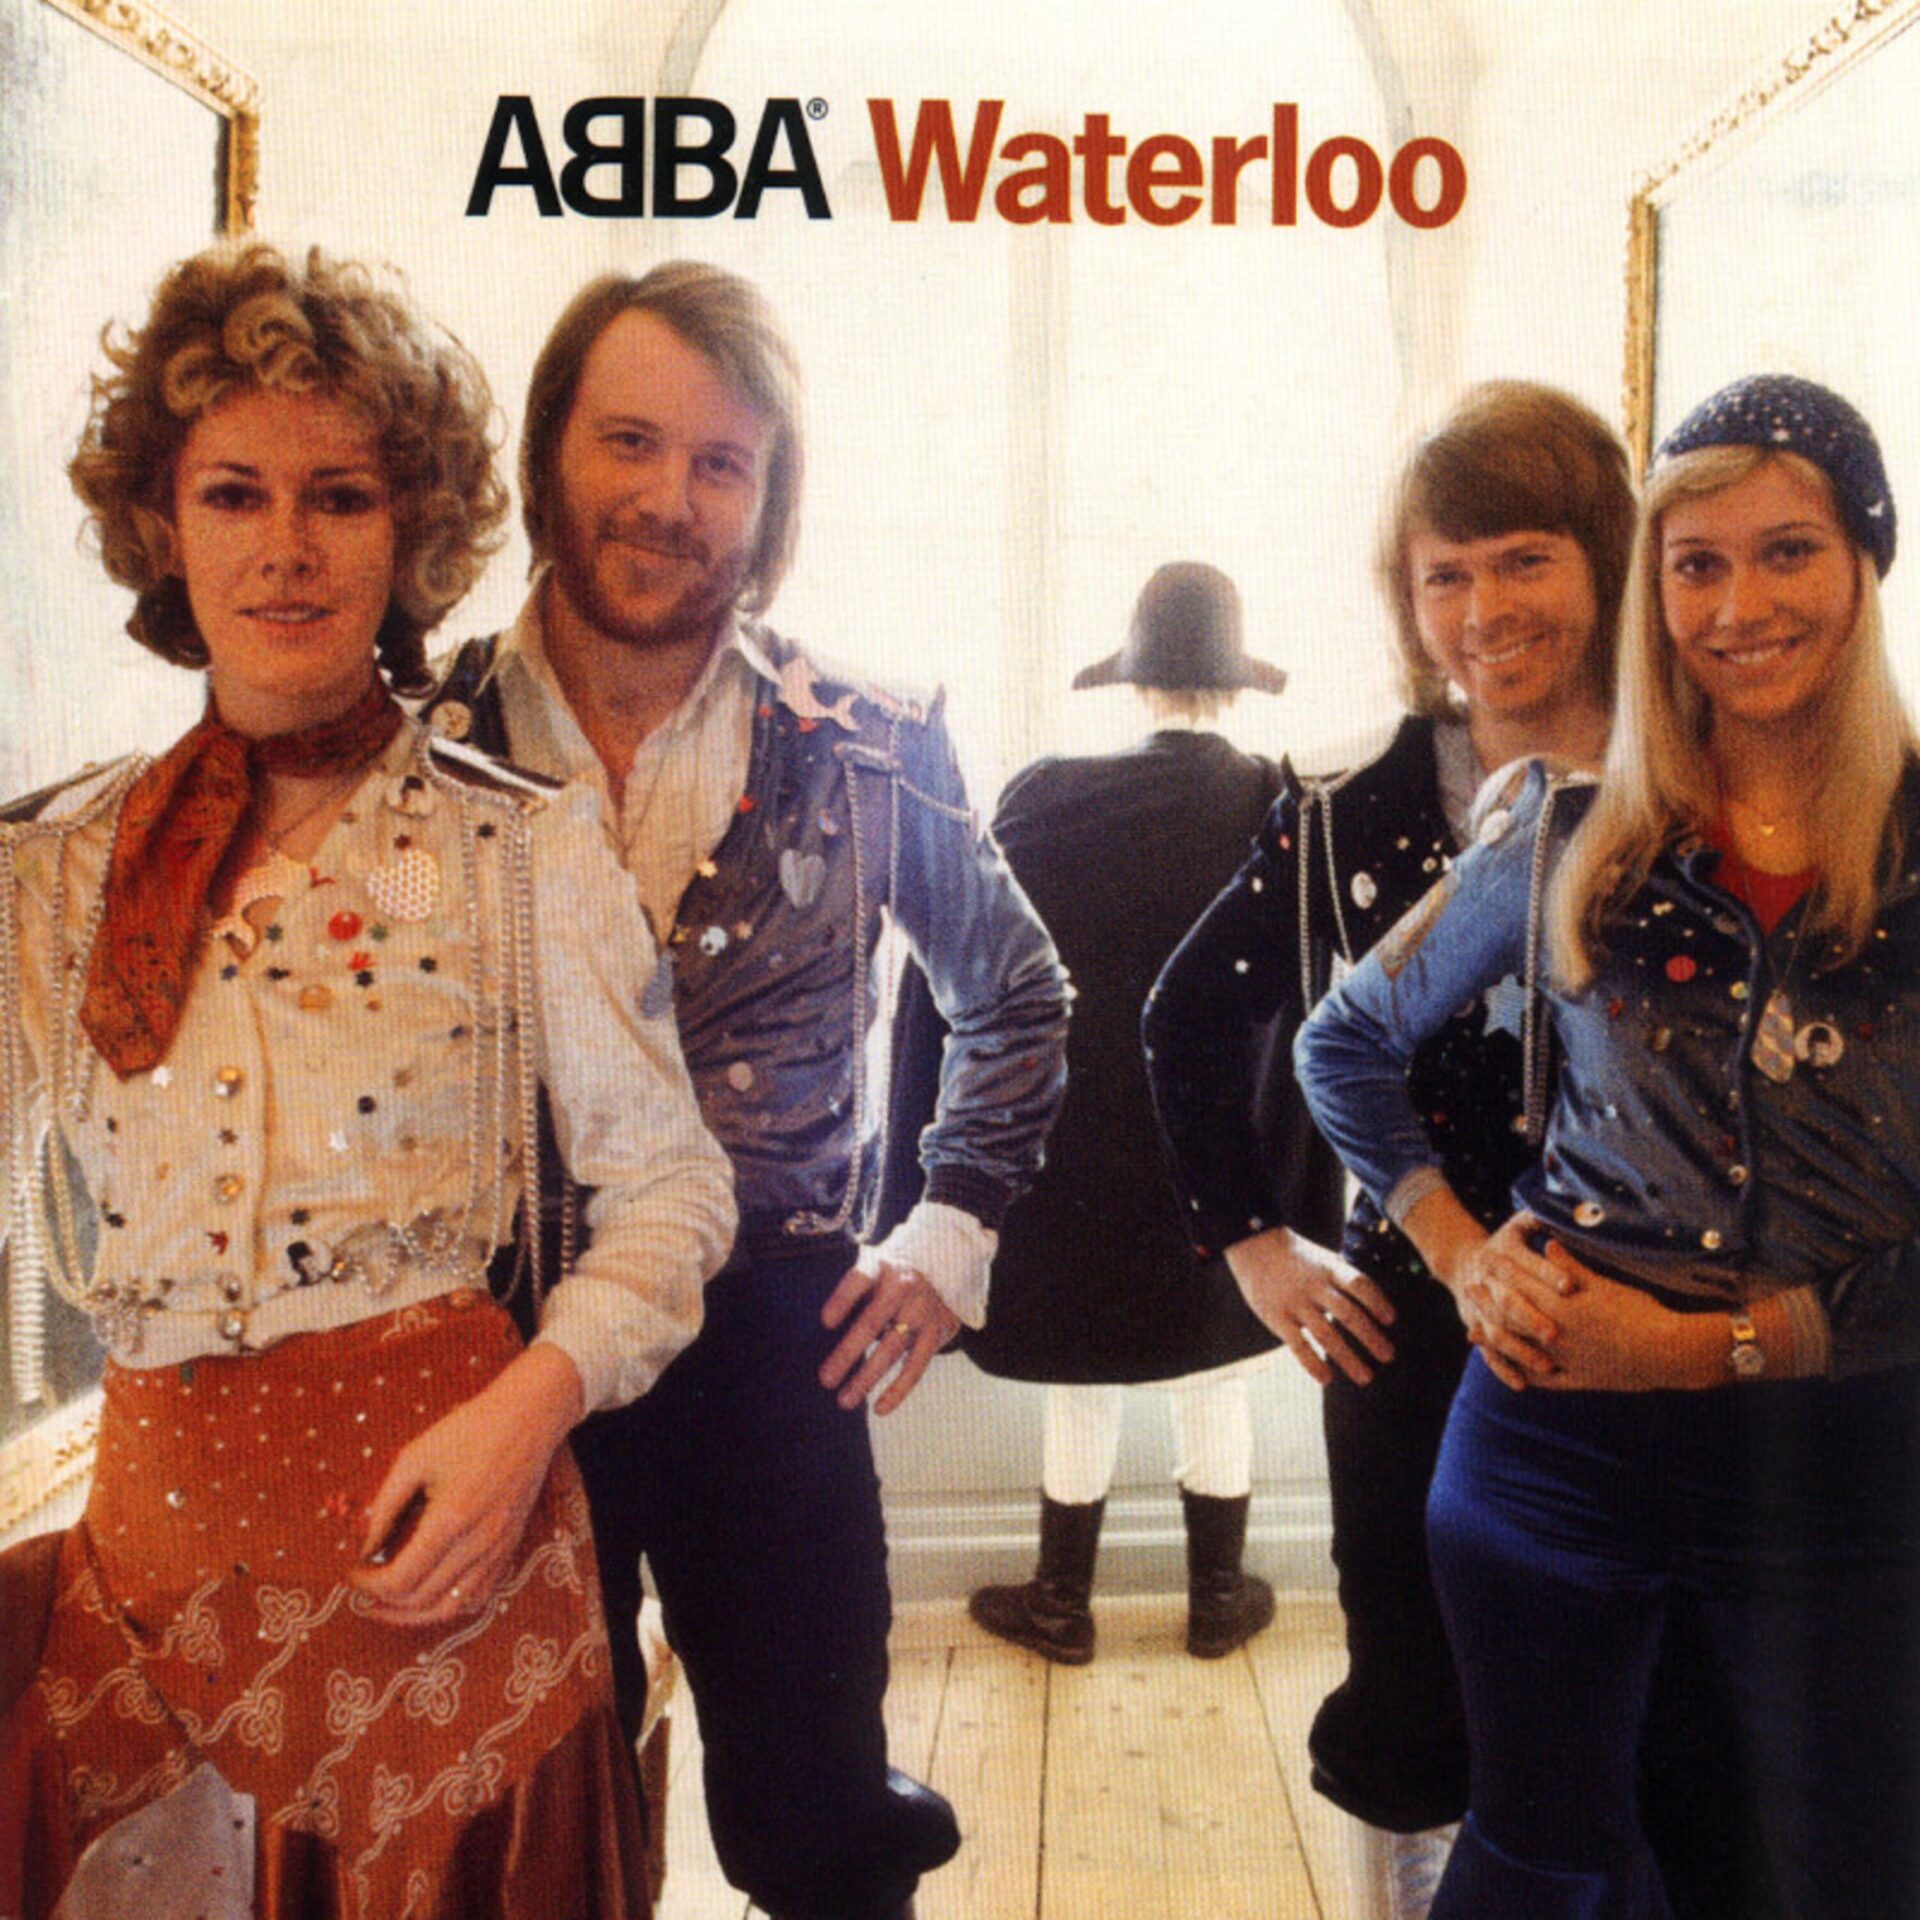 Nu kan du høre ABBA-sangen “Waterloo” i Dolby Atmos